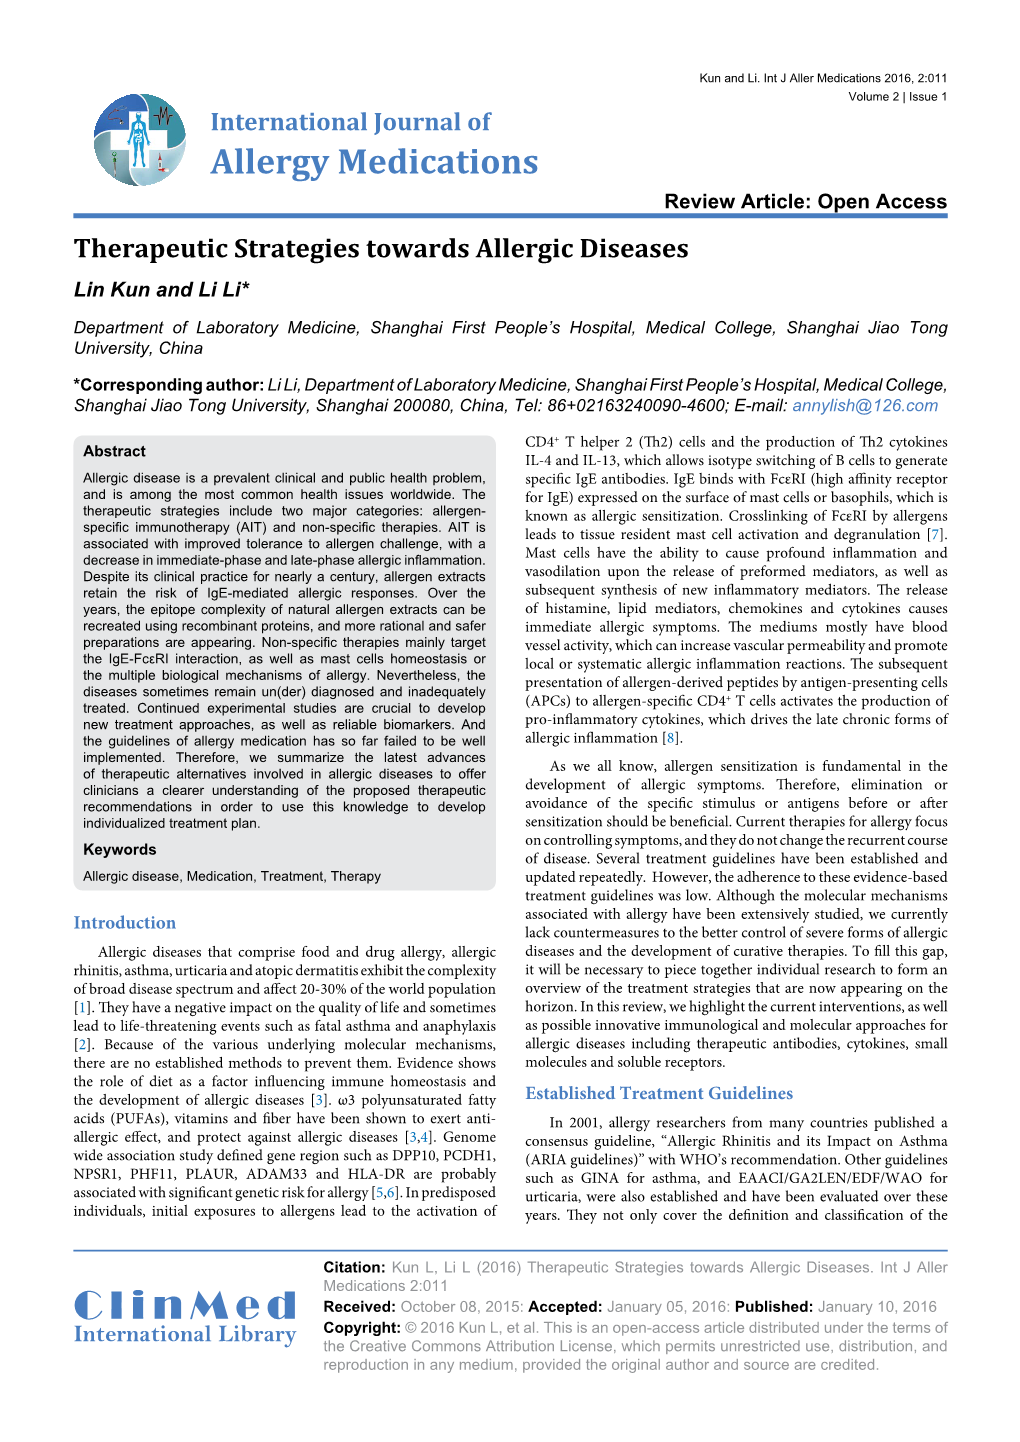 Therapeutic Strategies Towards Allergic Diseases Lin Kun and Li Li*